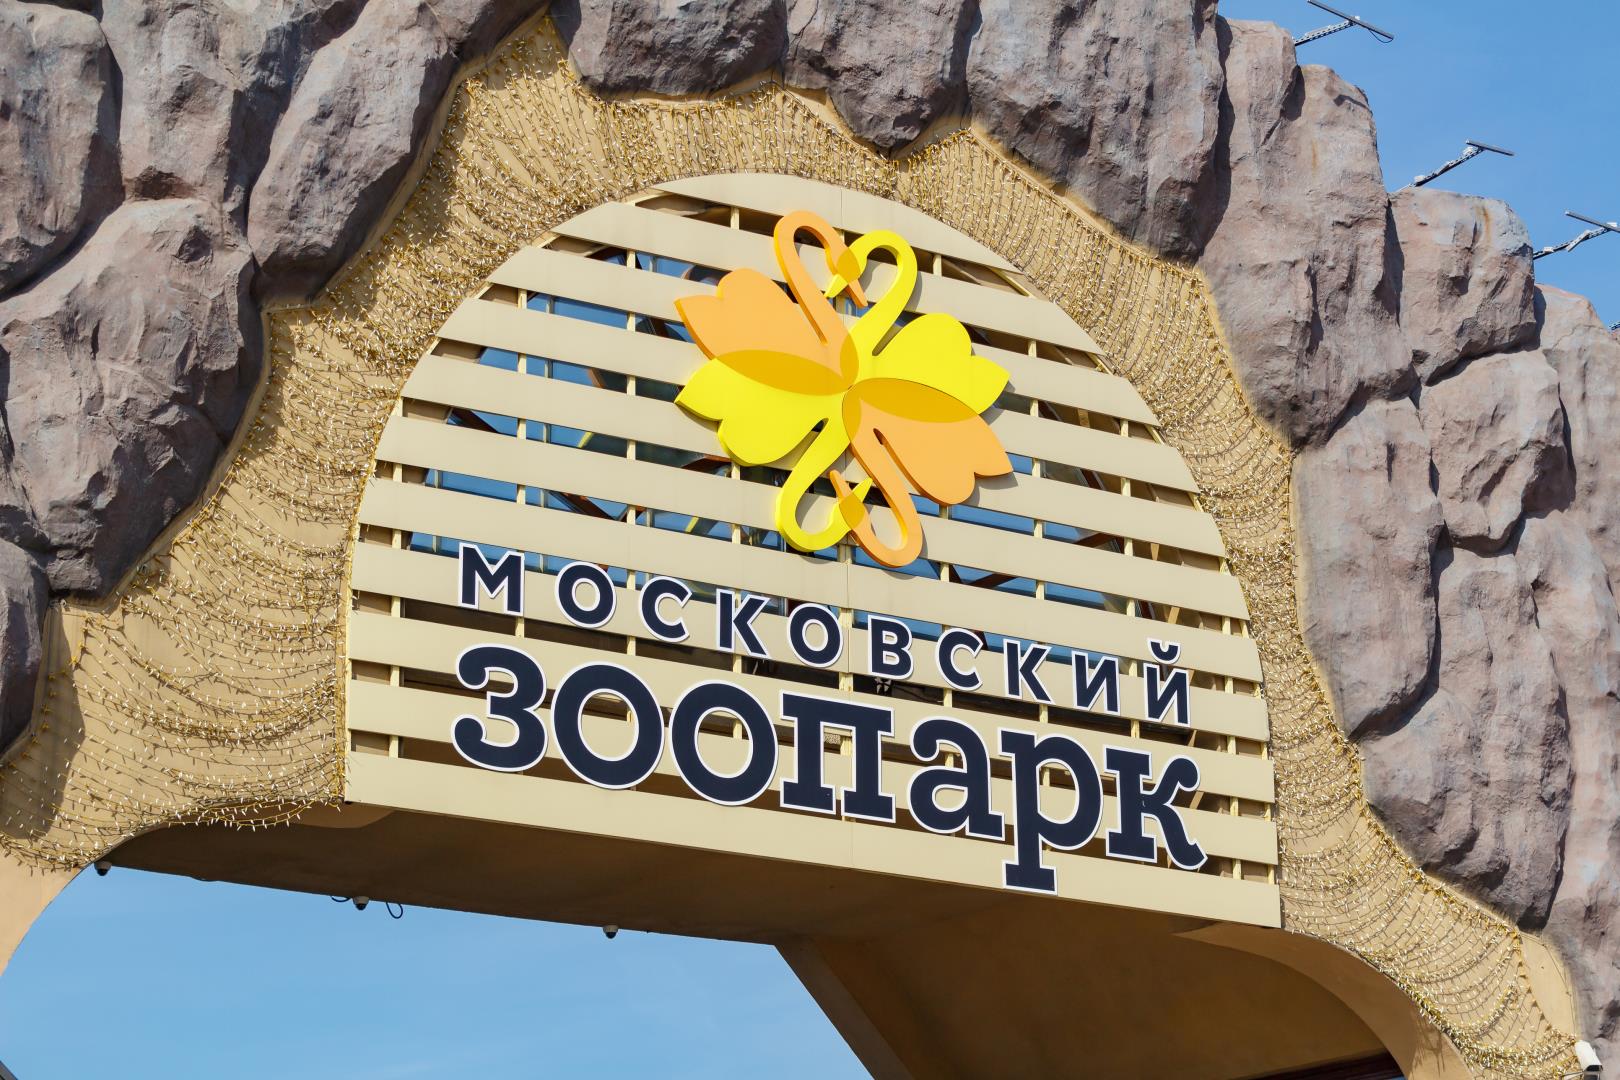 символ московского зоопарка манул